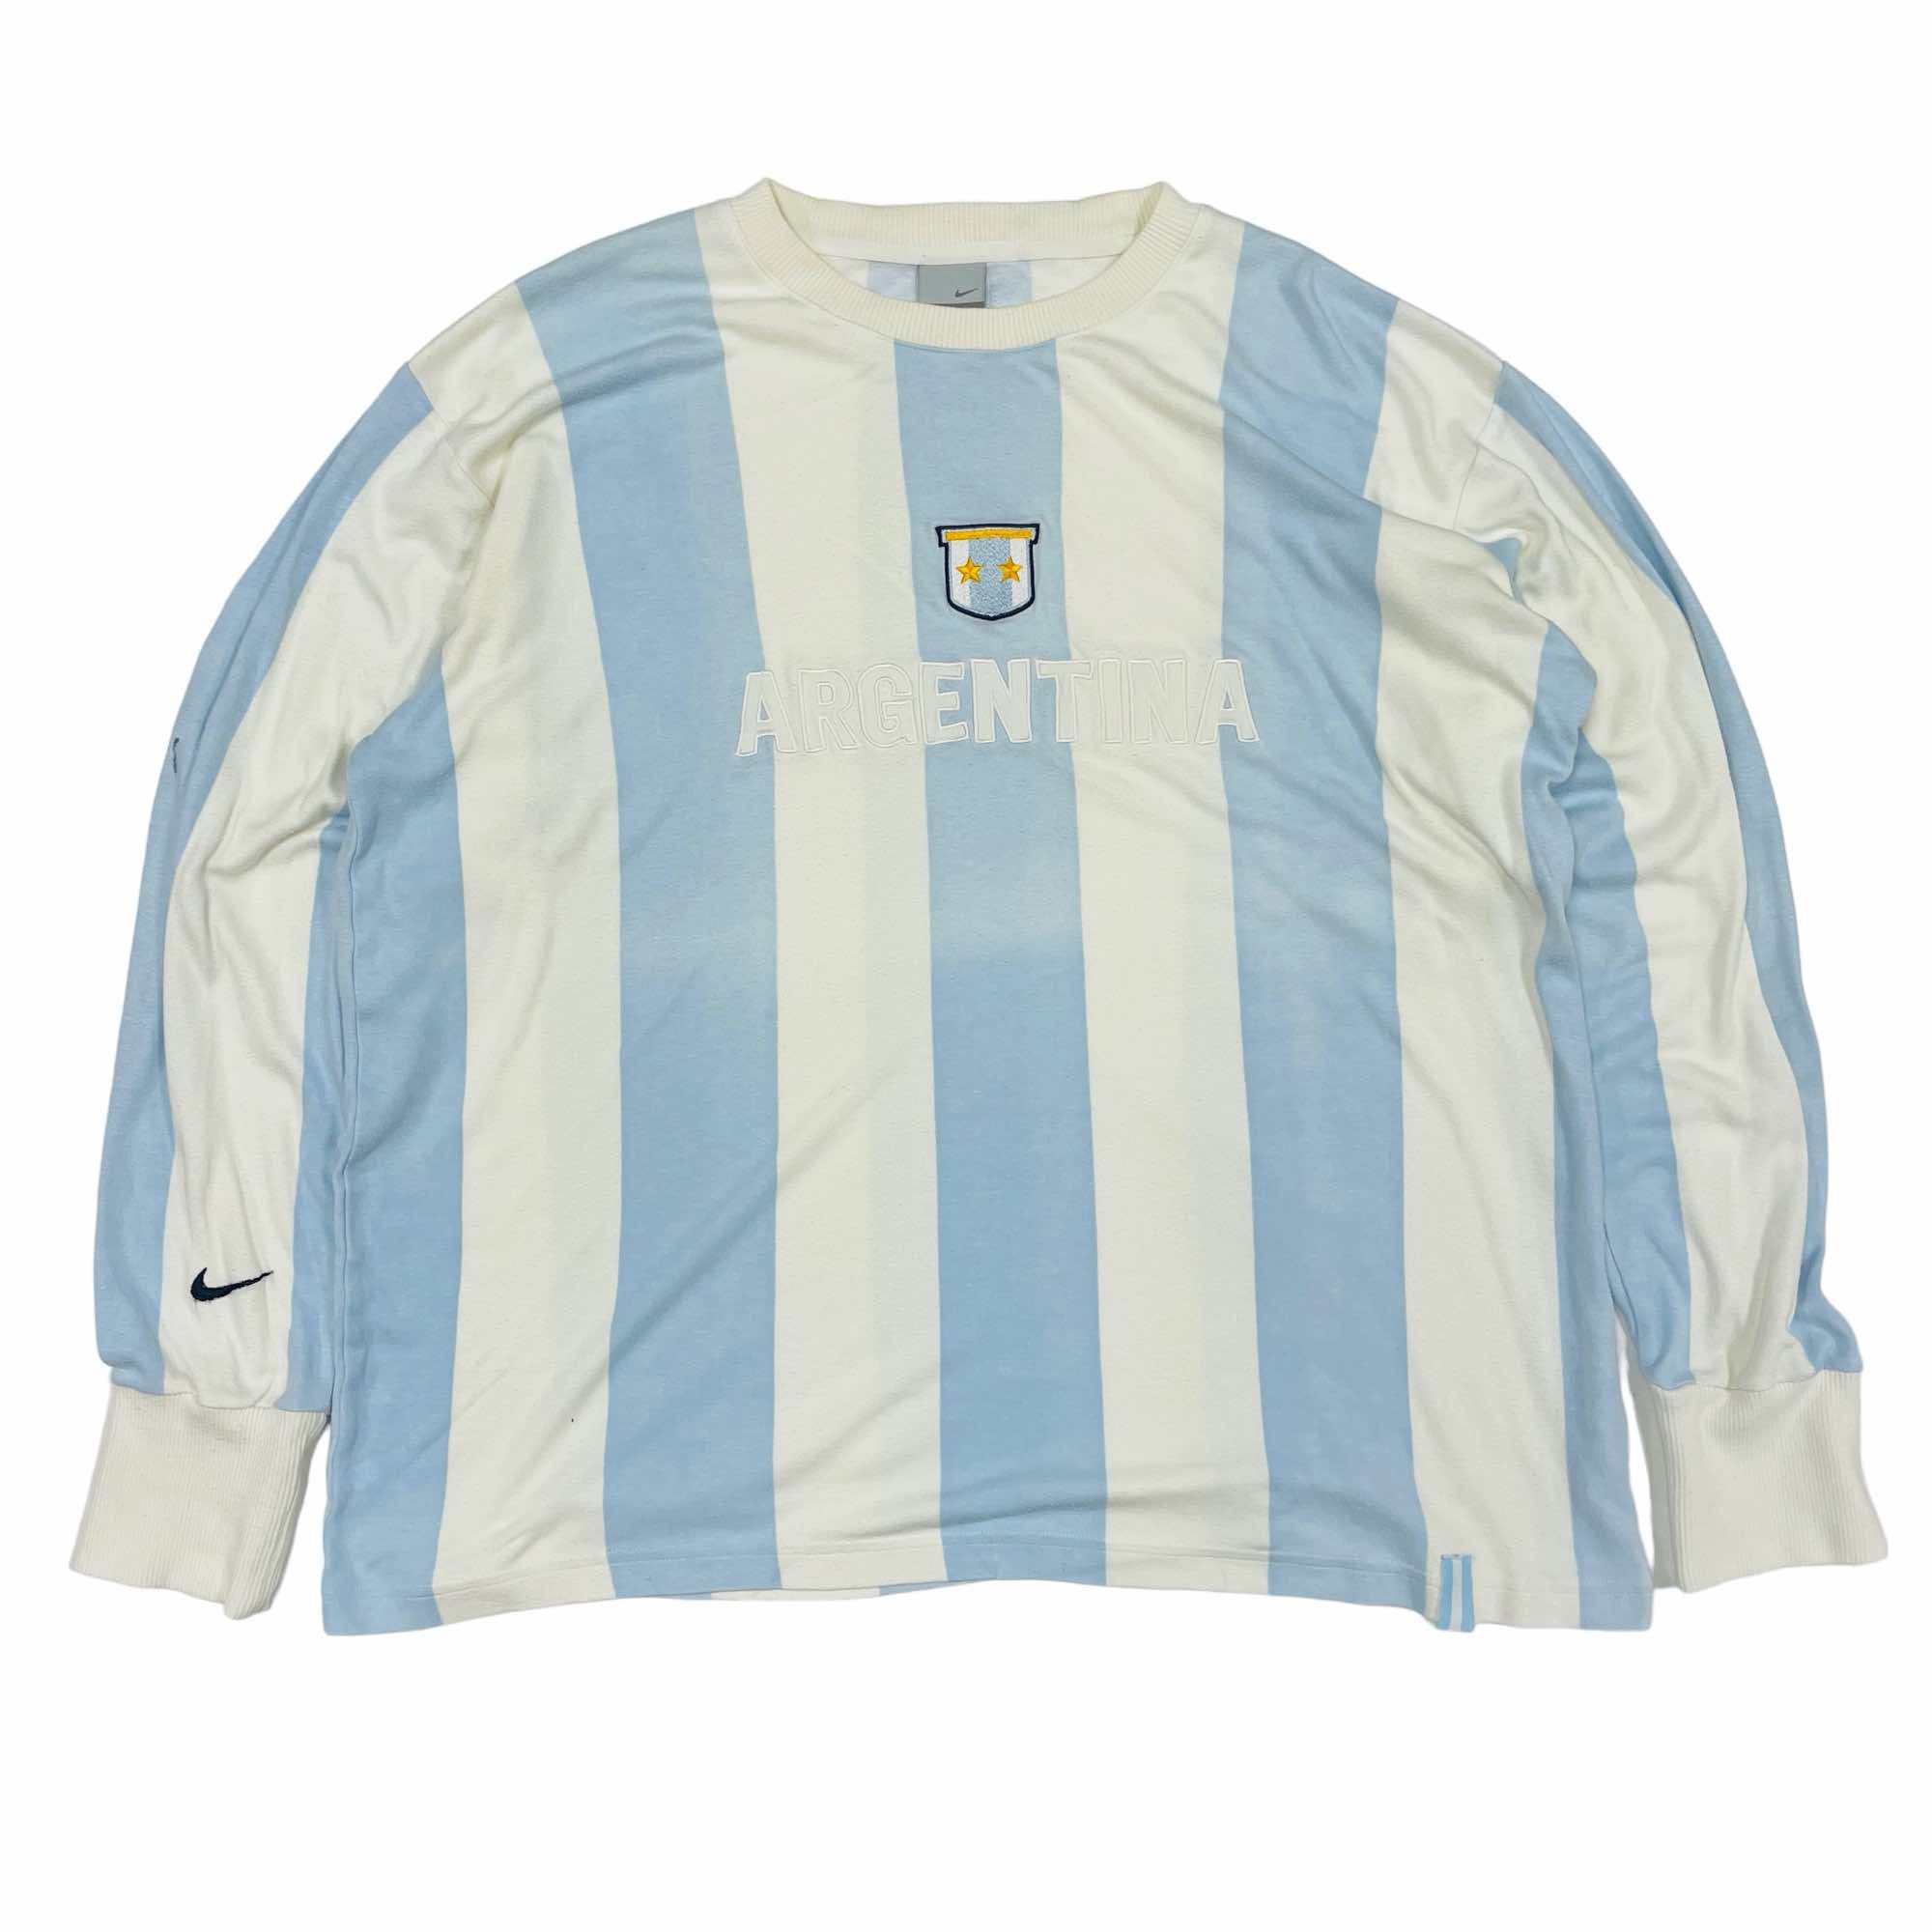 Argentina Retro Nike Long Sleeve Top - XL